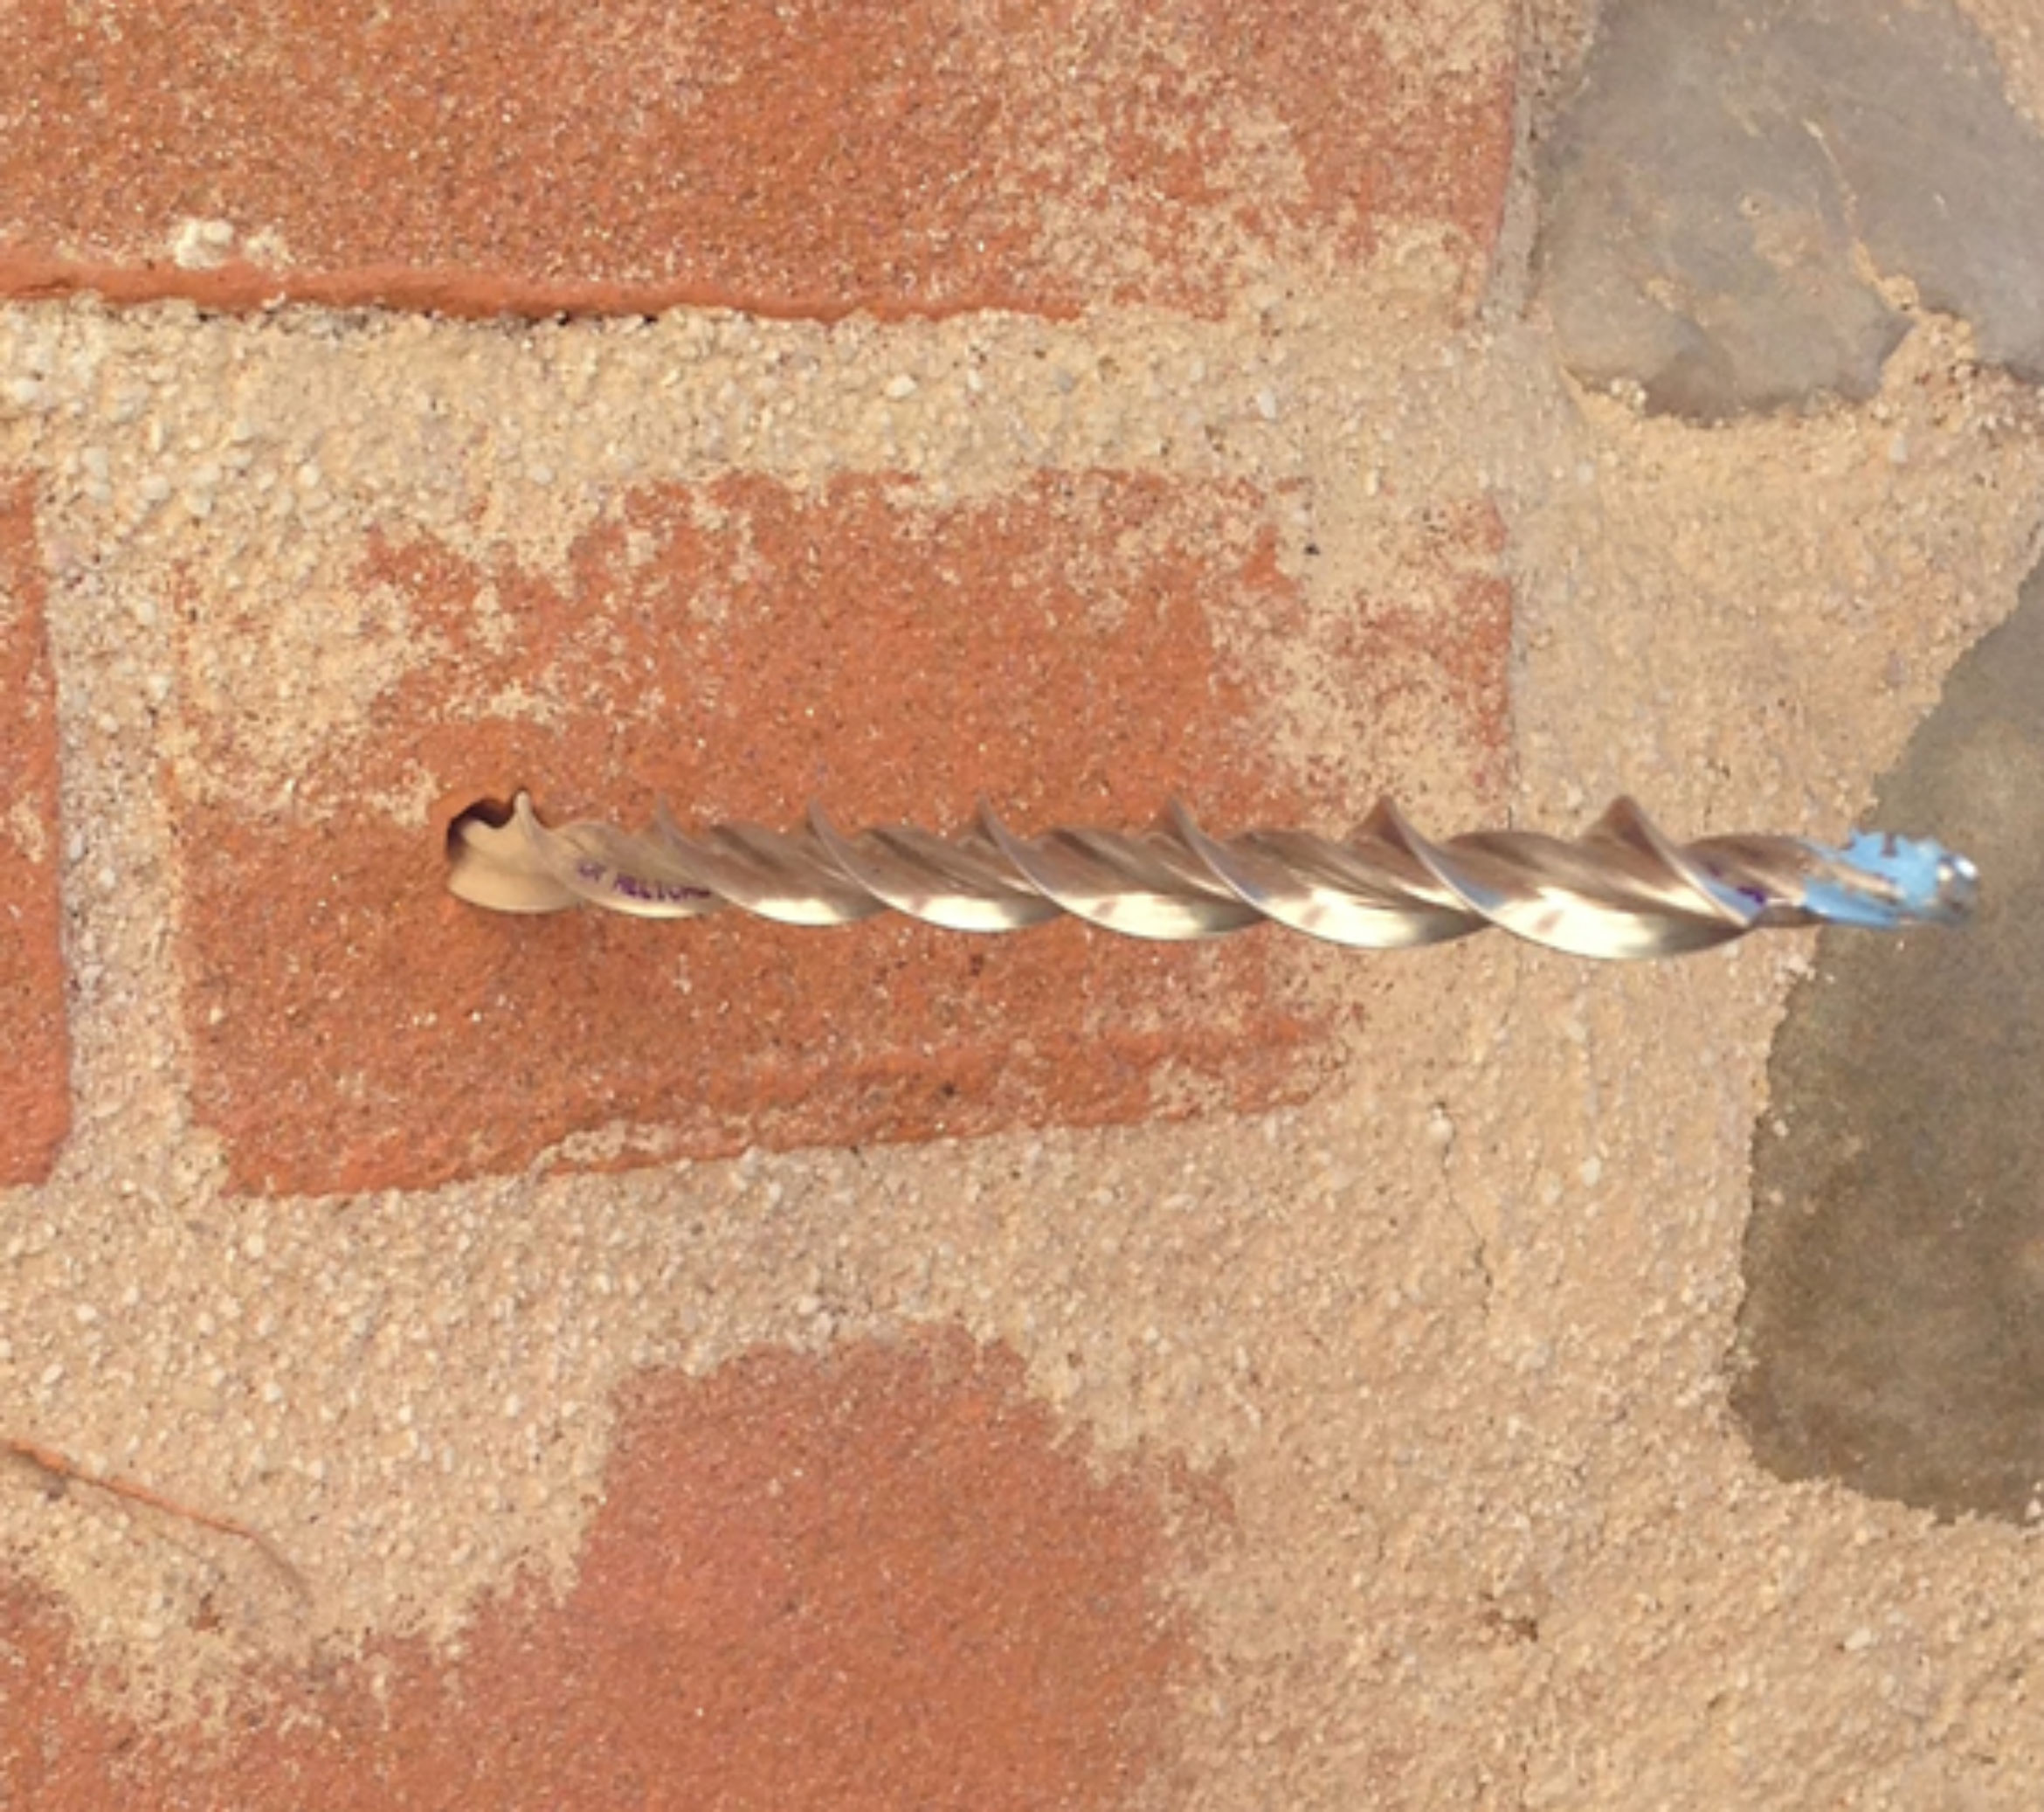 wall tie cutting thread in brick